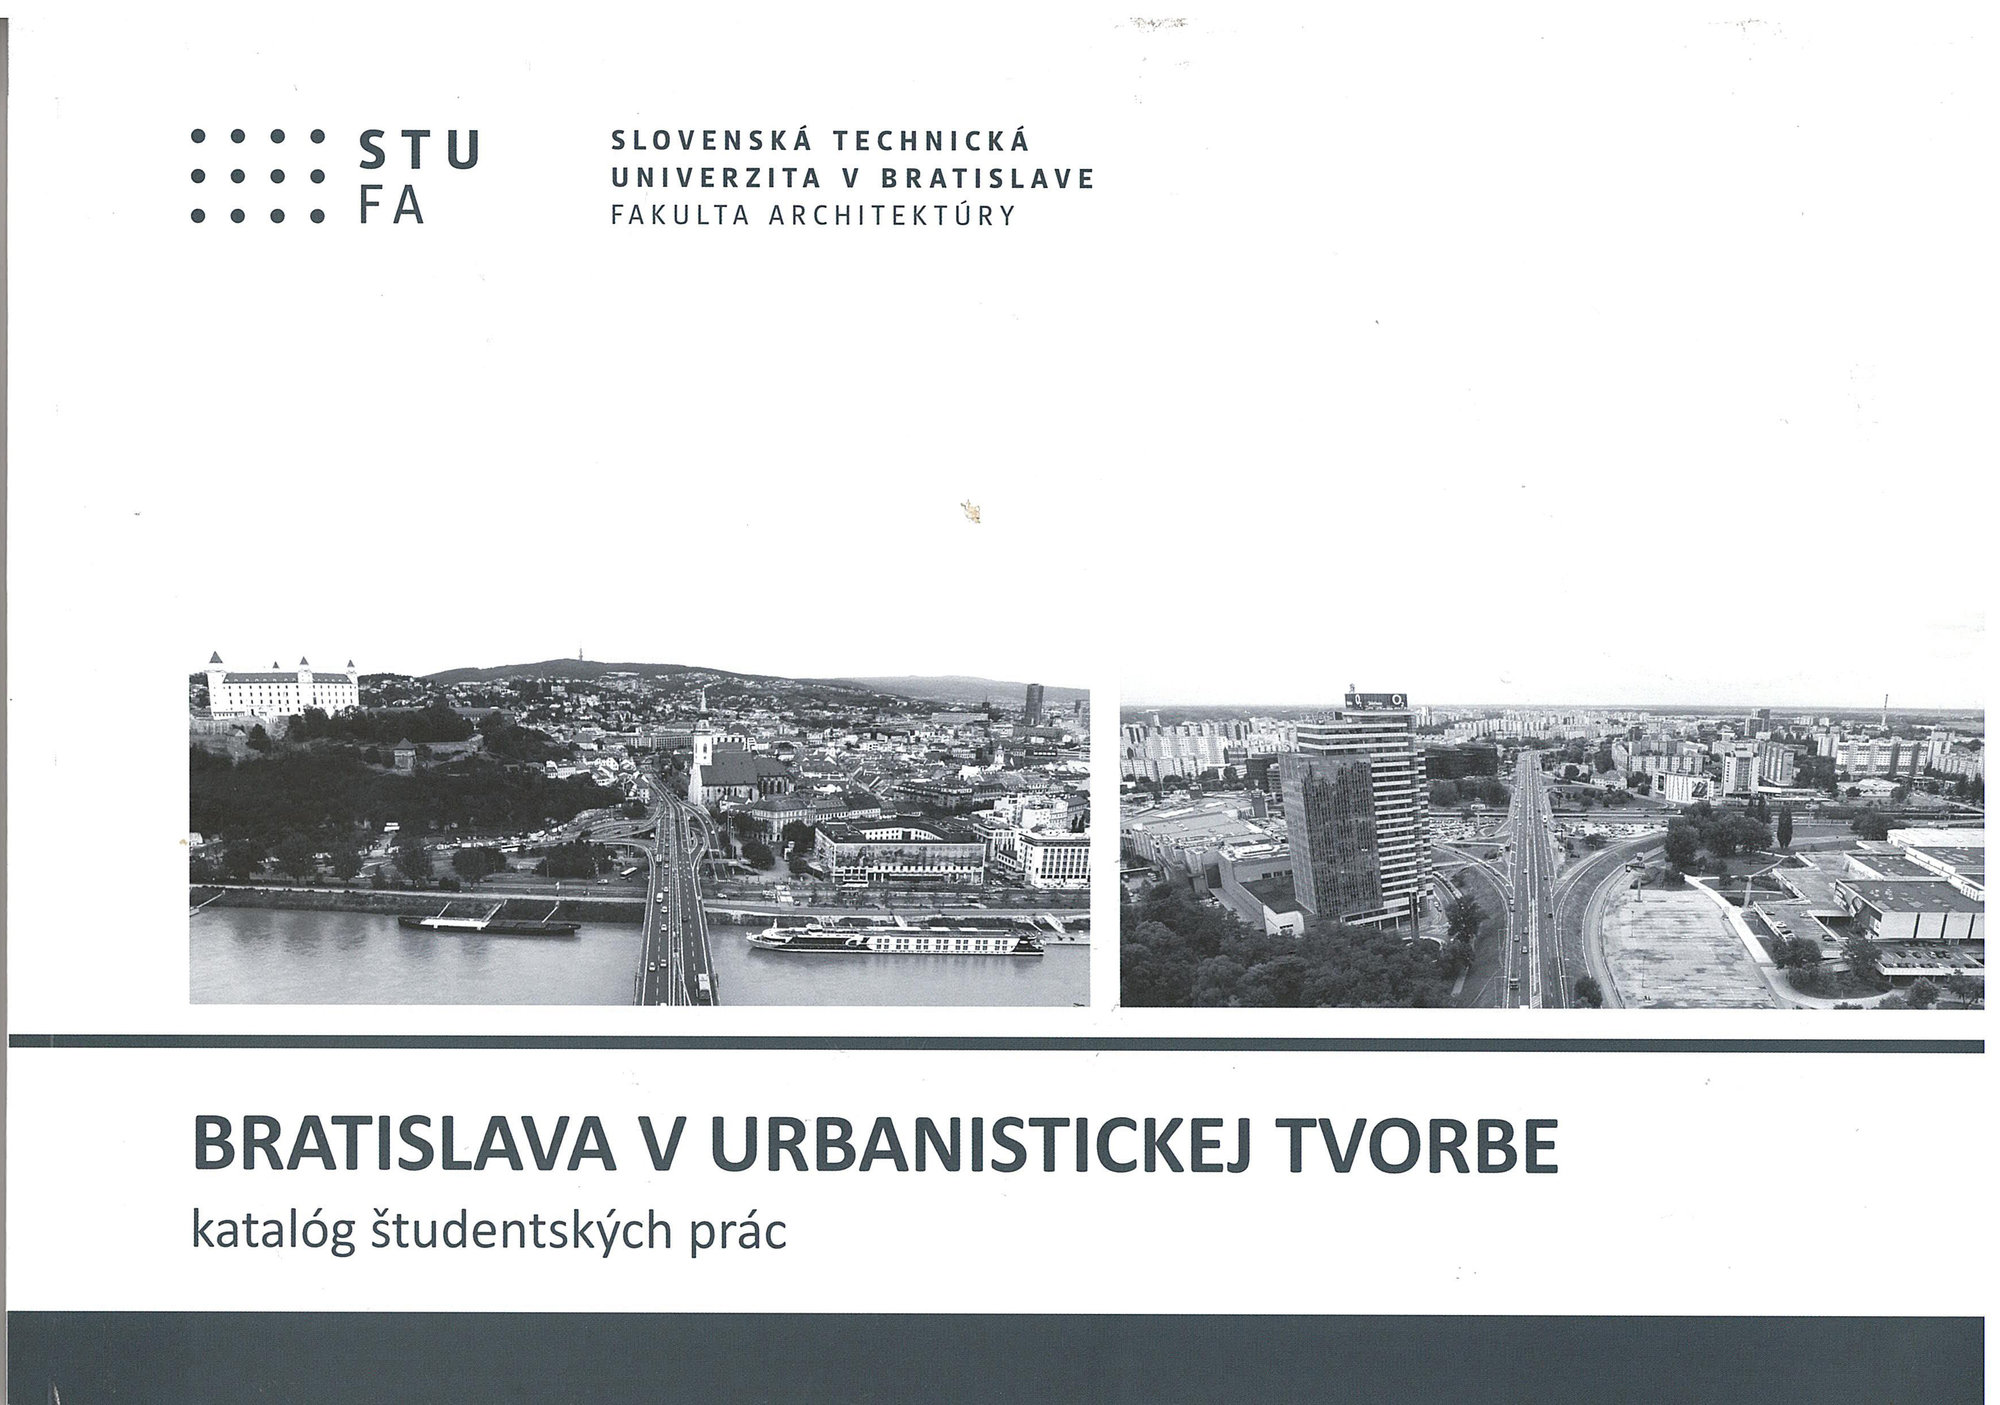 Bratislava v urbanistickej tvorbe